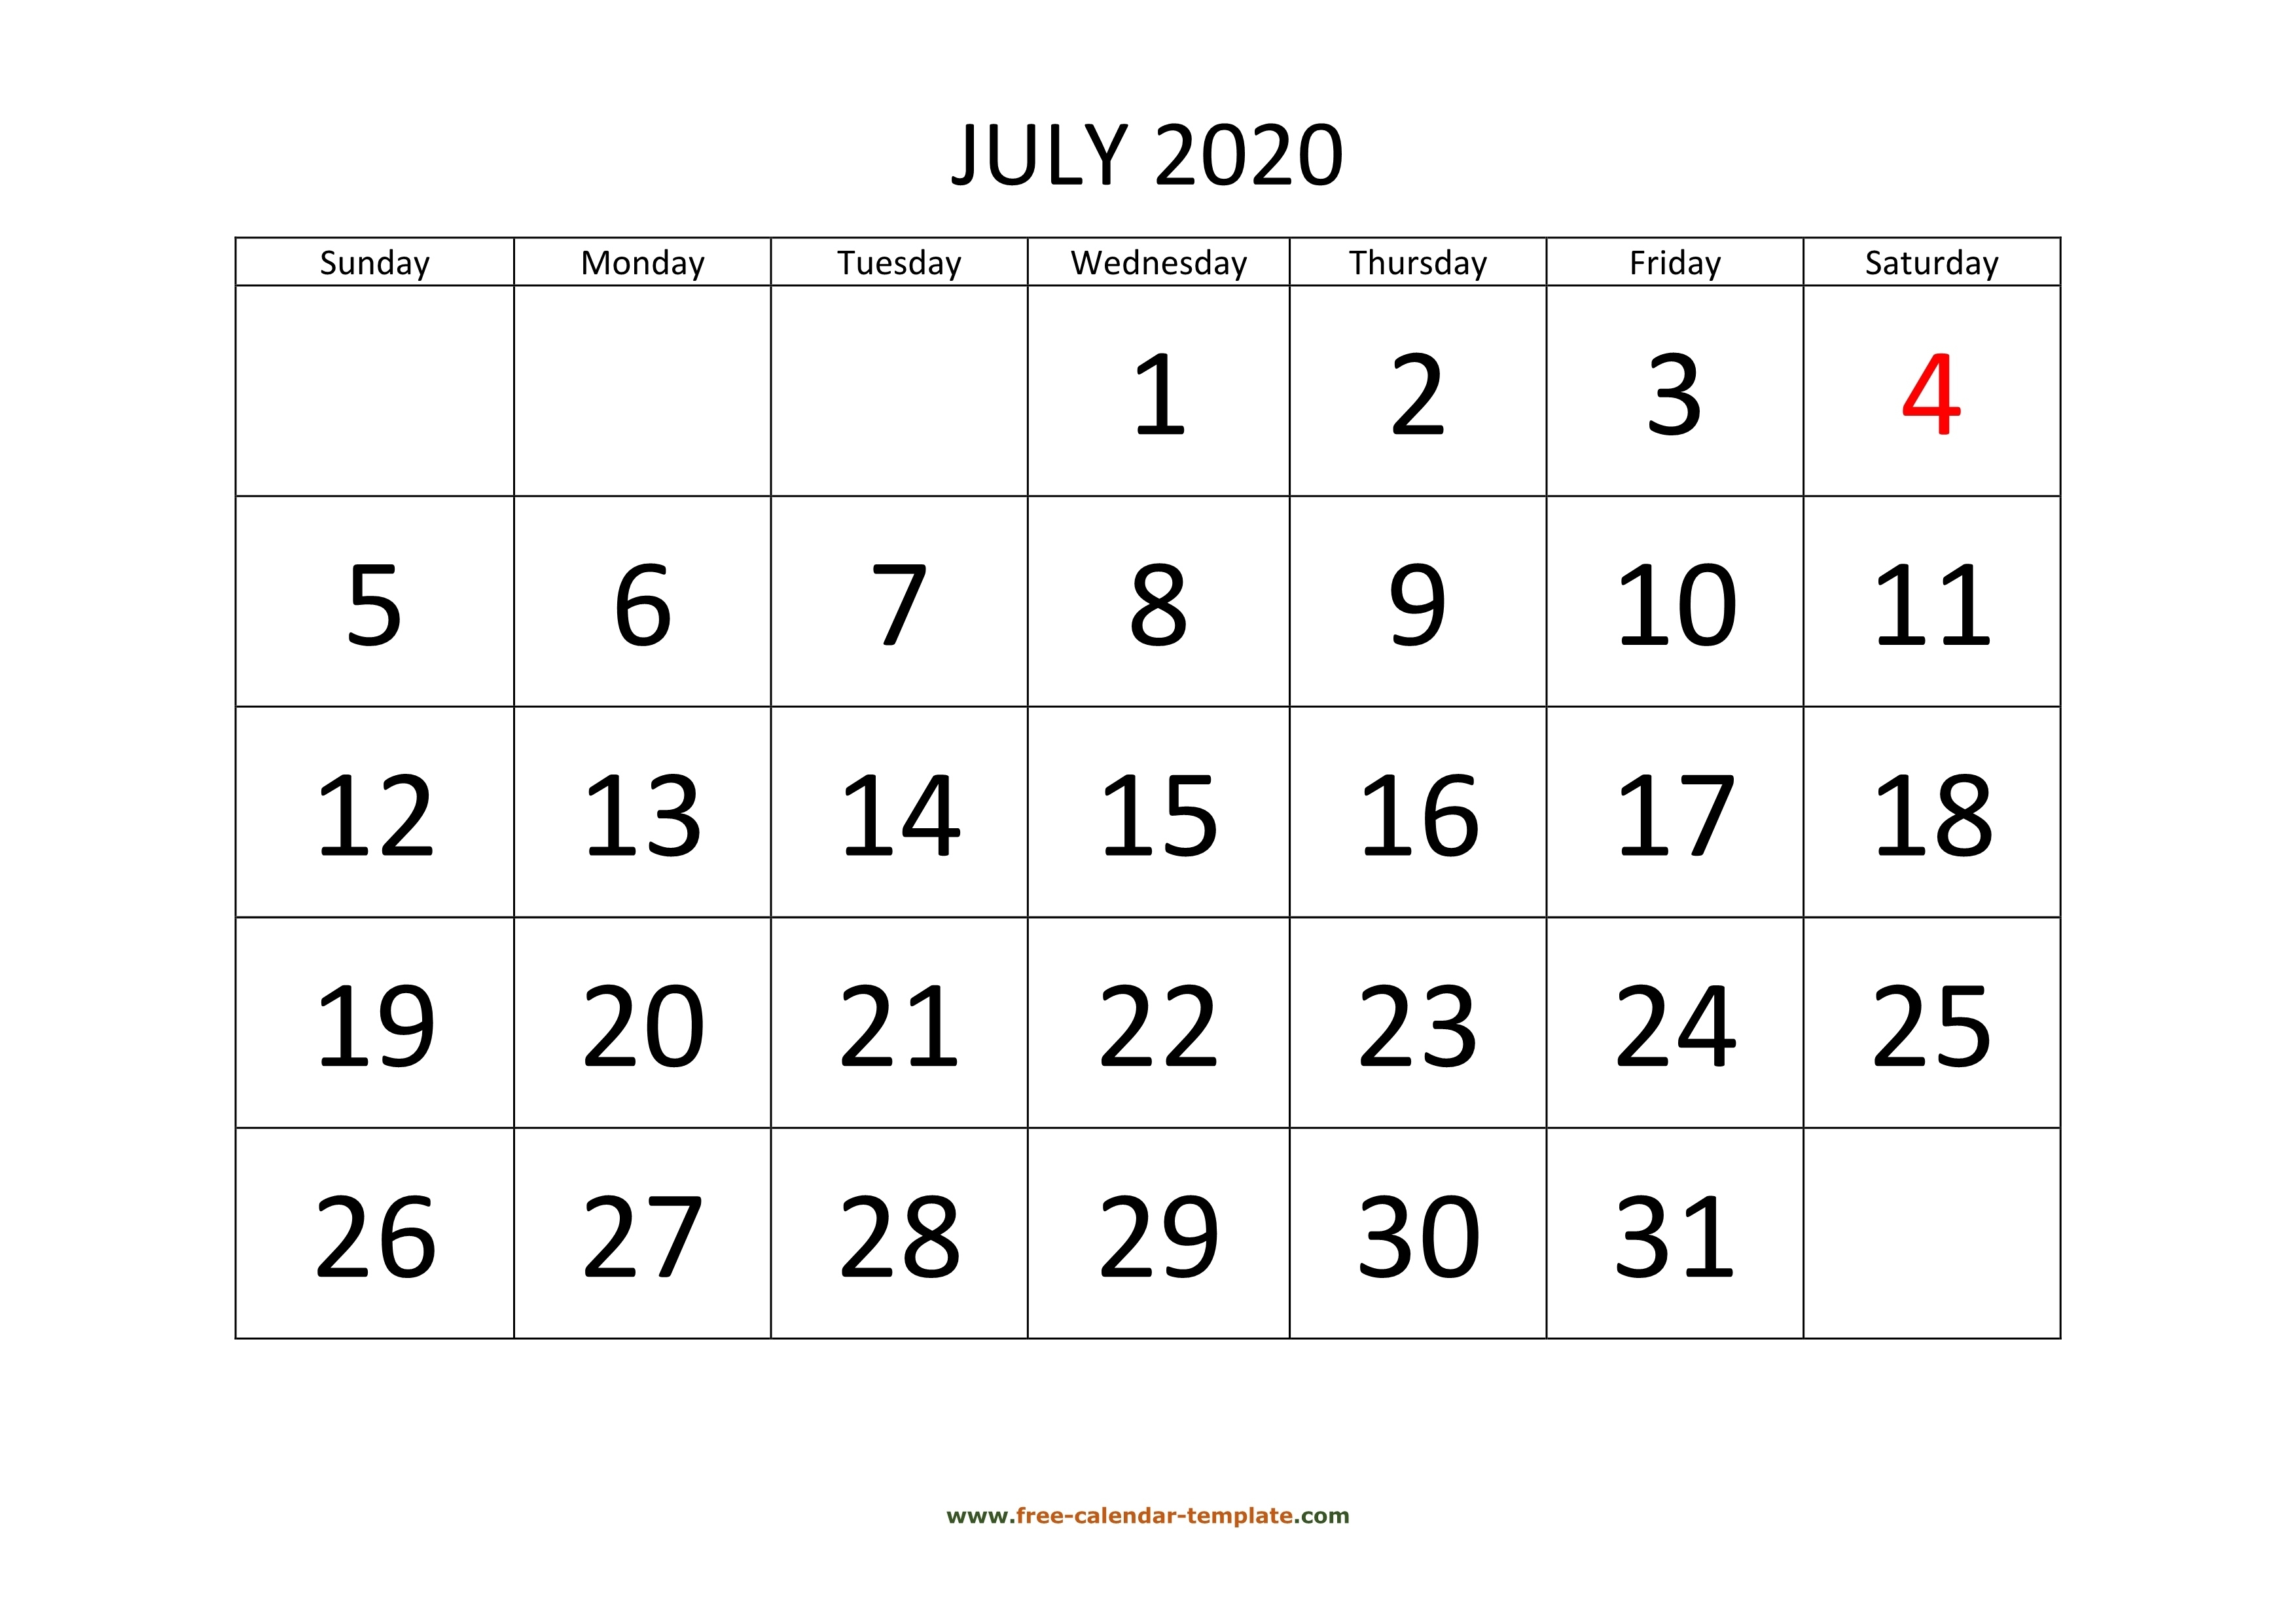 July 2020 Free Calendar Tempplate | Free-Calendar-Template Calendar Grid Template Pdf